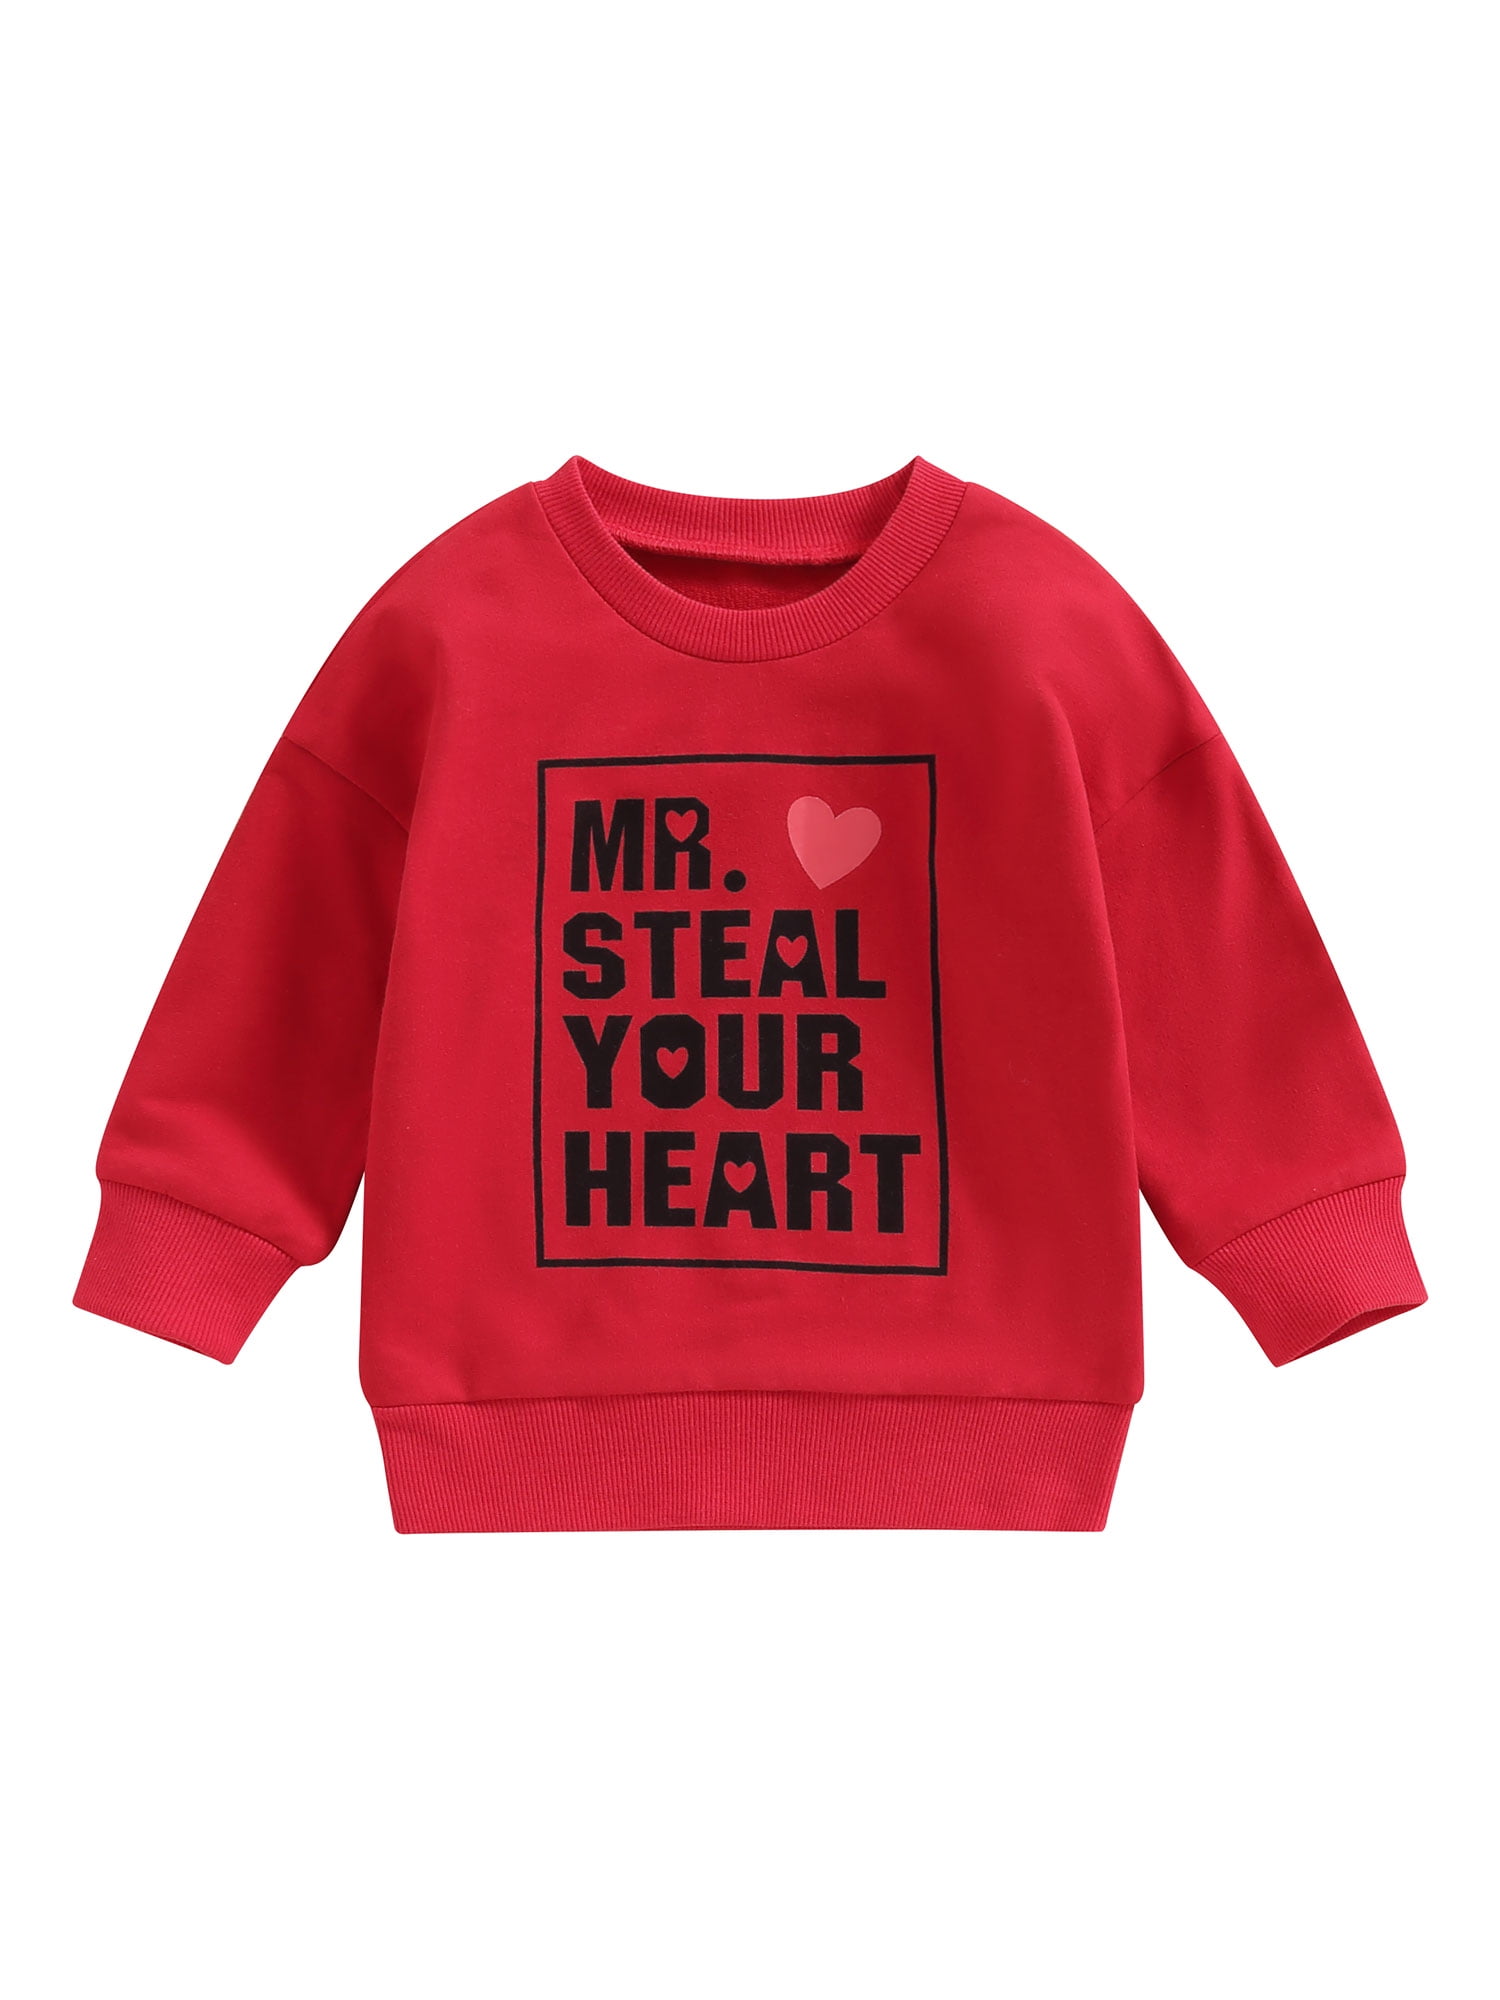 Bagilaanoe Toddler Baby Boy Valentine\'s Day Sweatshirt Long Sleeve Letter  Print Pullover 6M 12M 18M 24M 3T 4T 5T Kids Loose Tee Tops